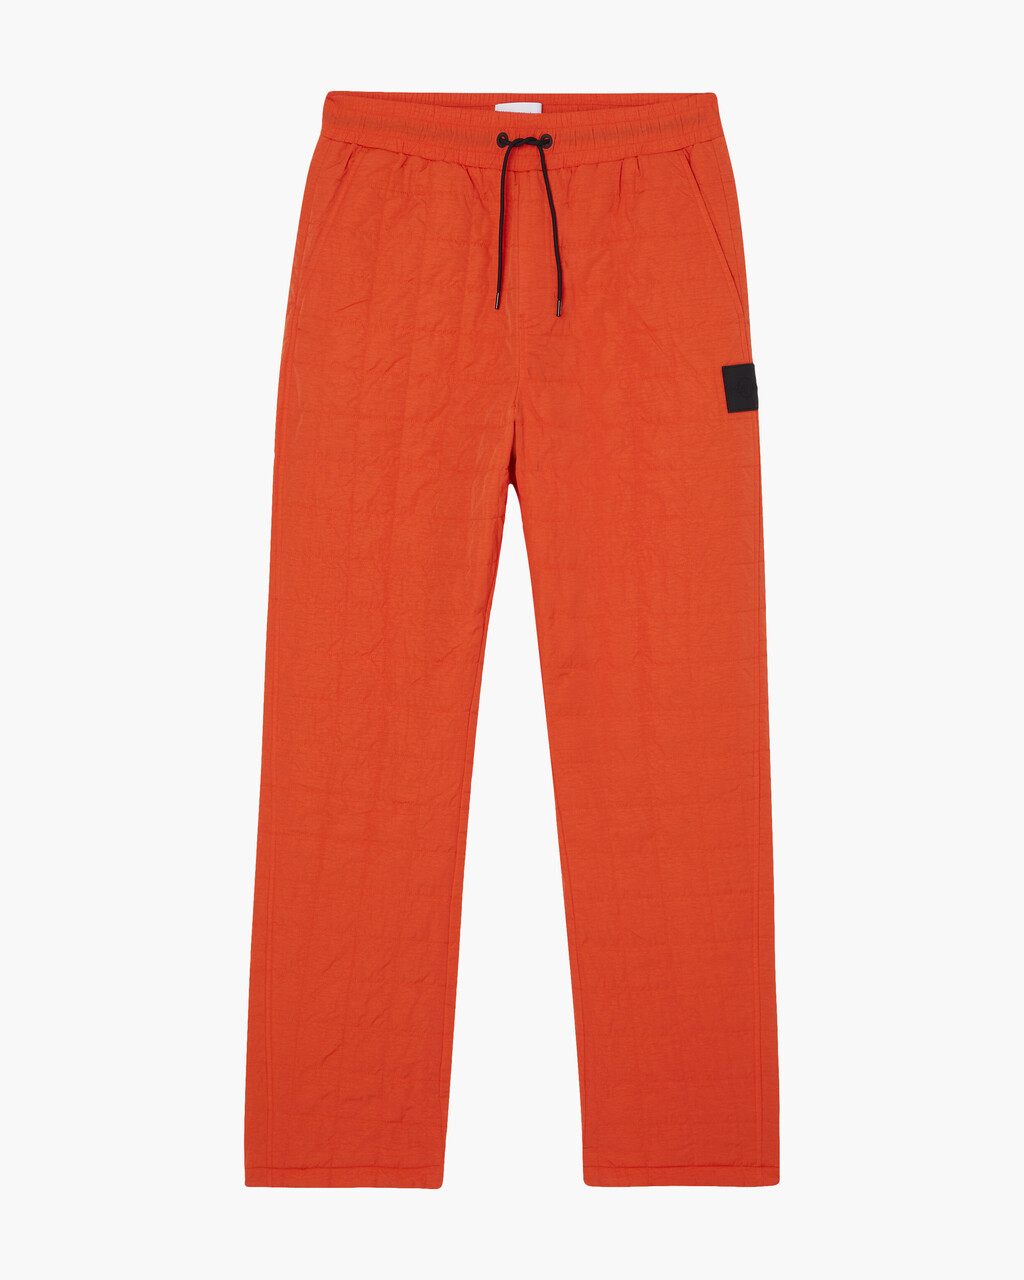 永續絎縫運動褲, Coral Orange, hi-res